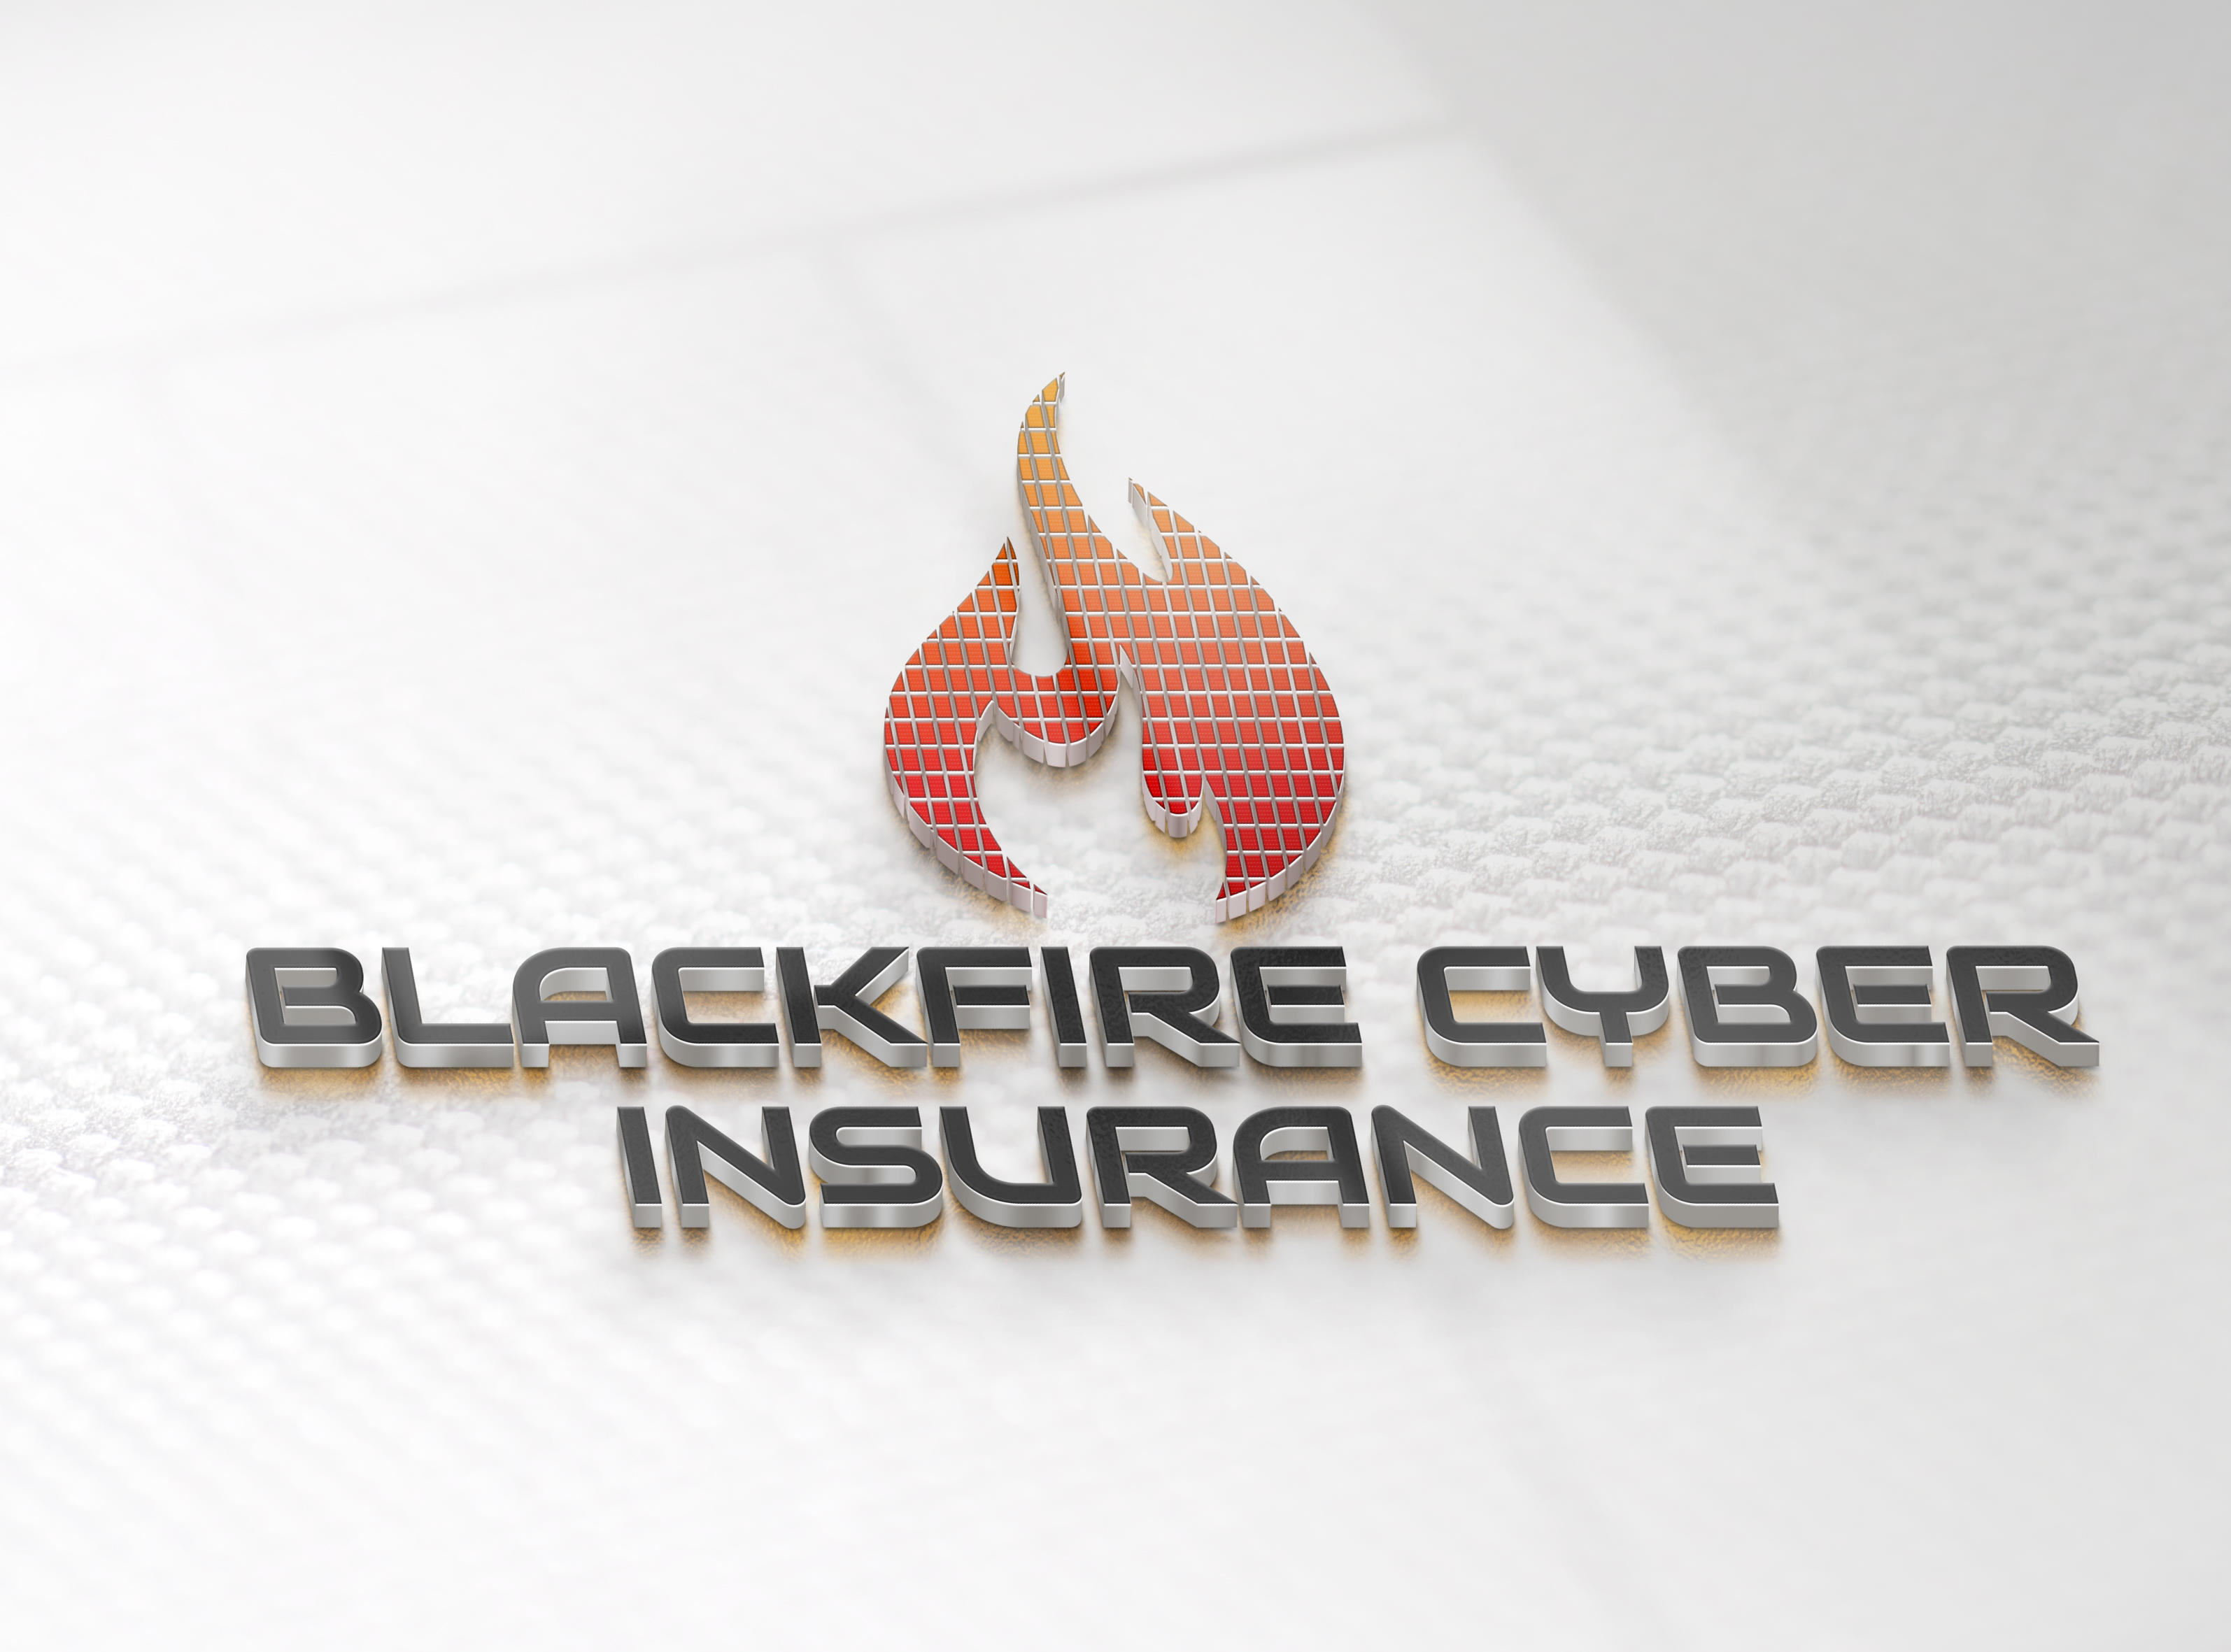 BlackFire Cyber Insurance Photo